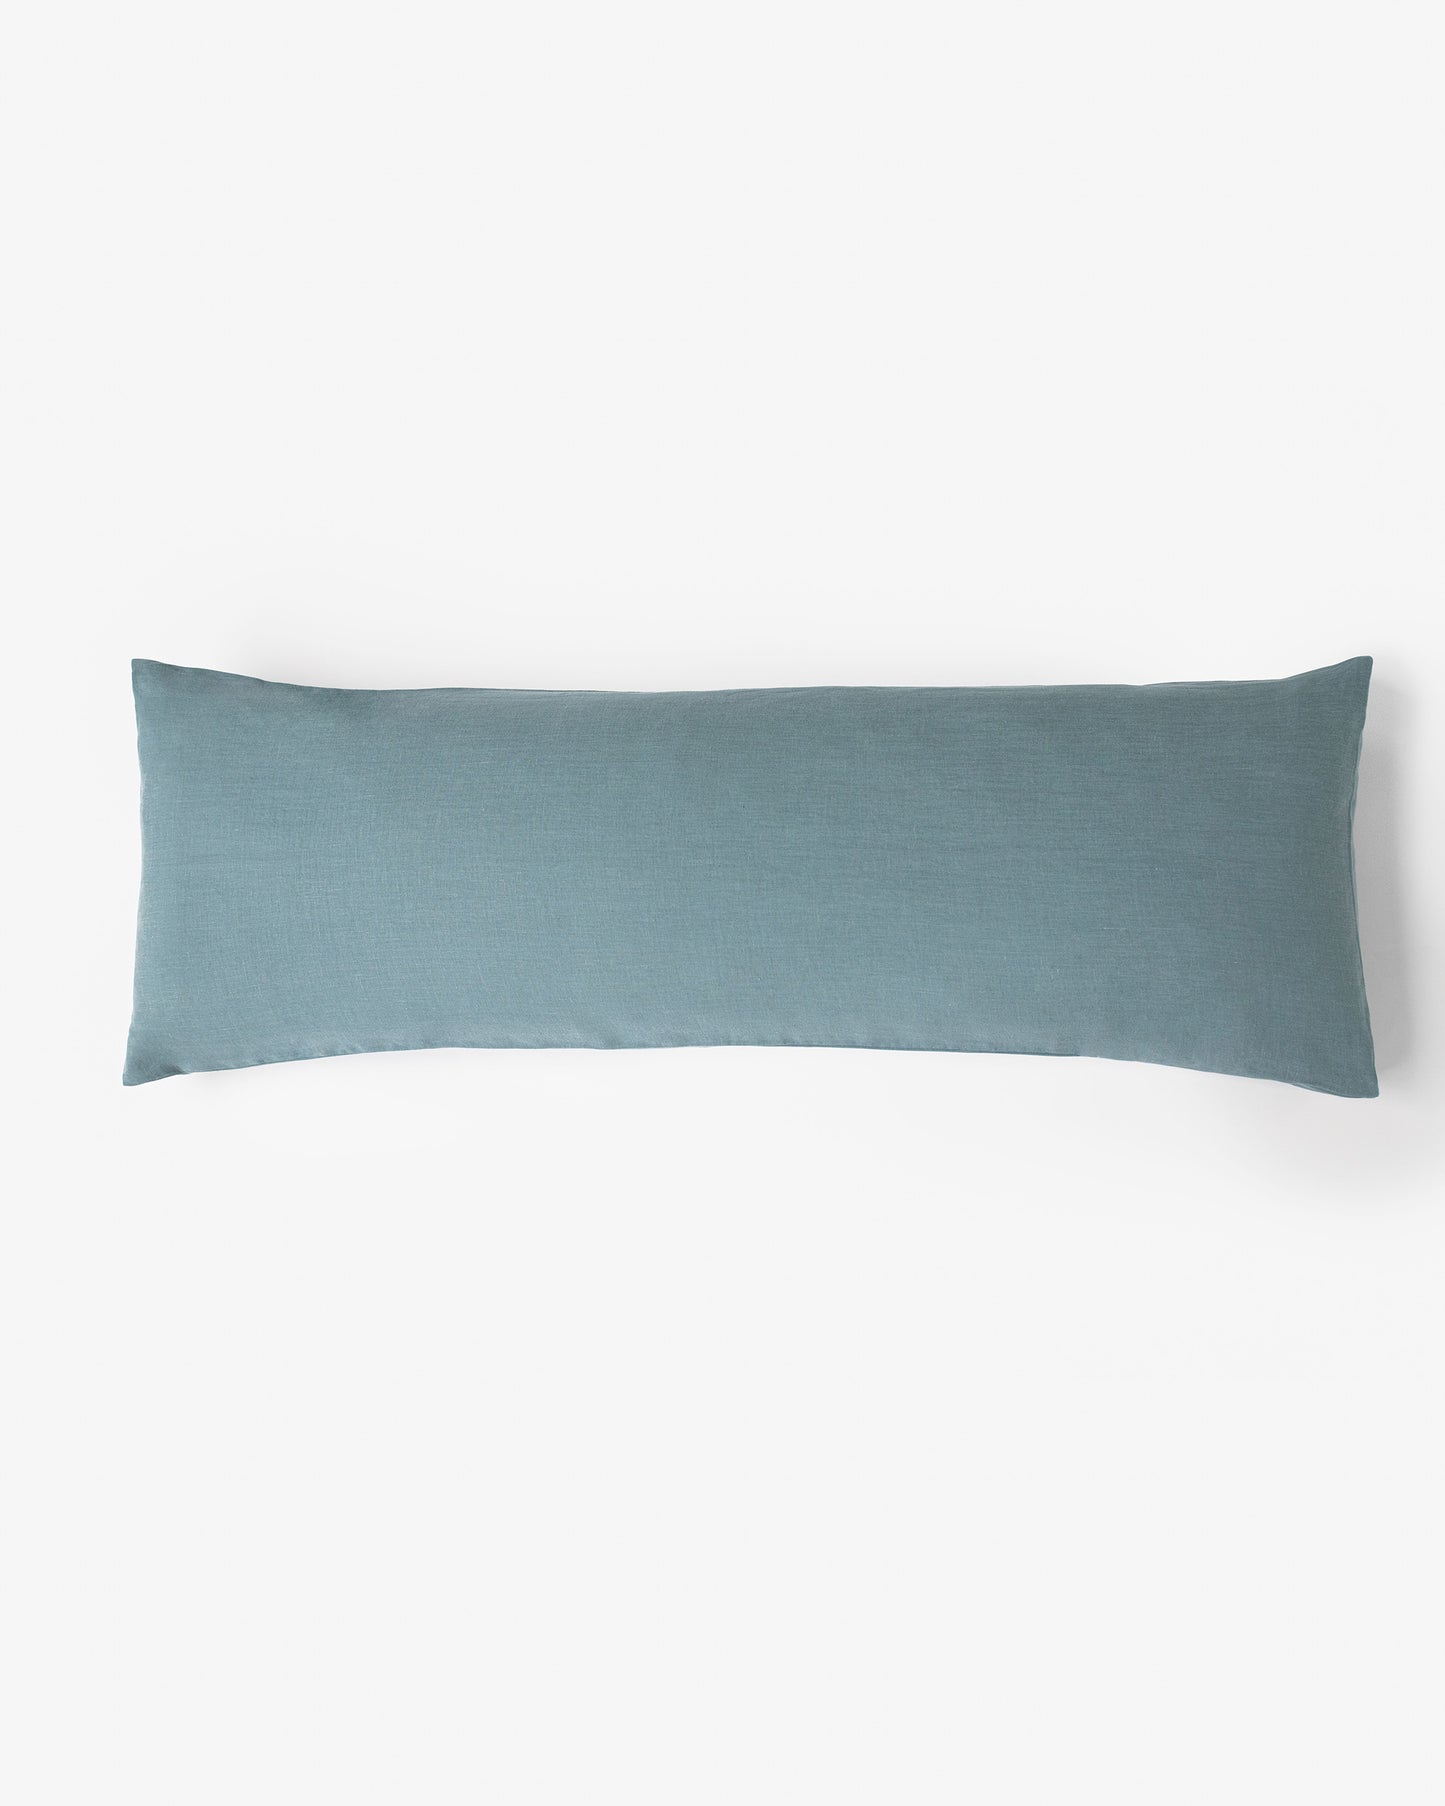 Body pillowcase in Gray blue - MagicLinen